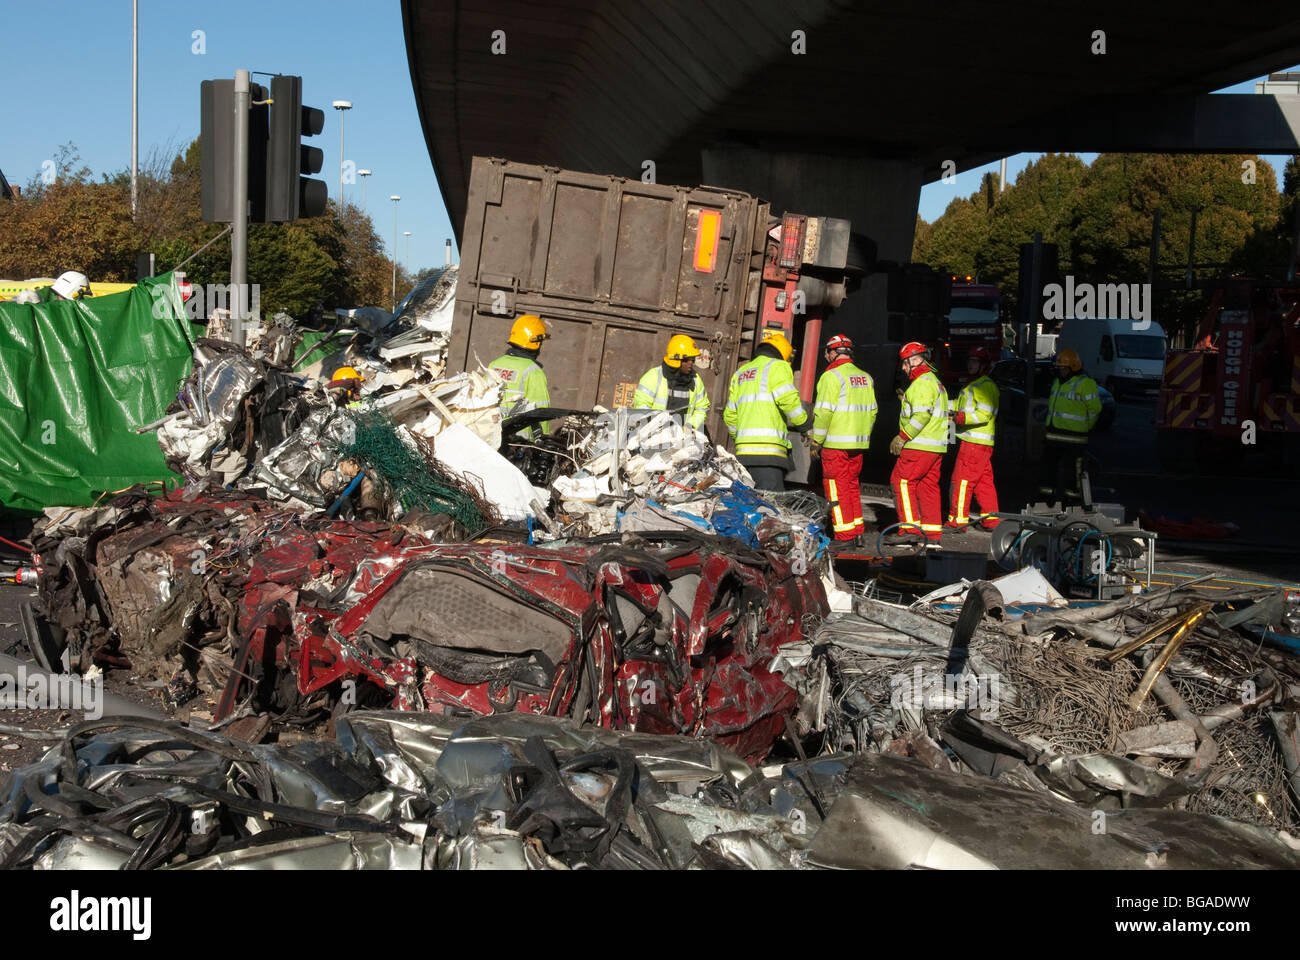 Crashed overturned lorry containing crushed cars Stock Photo